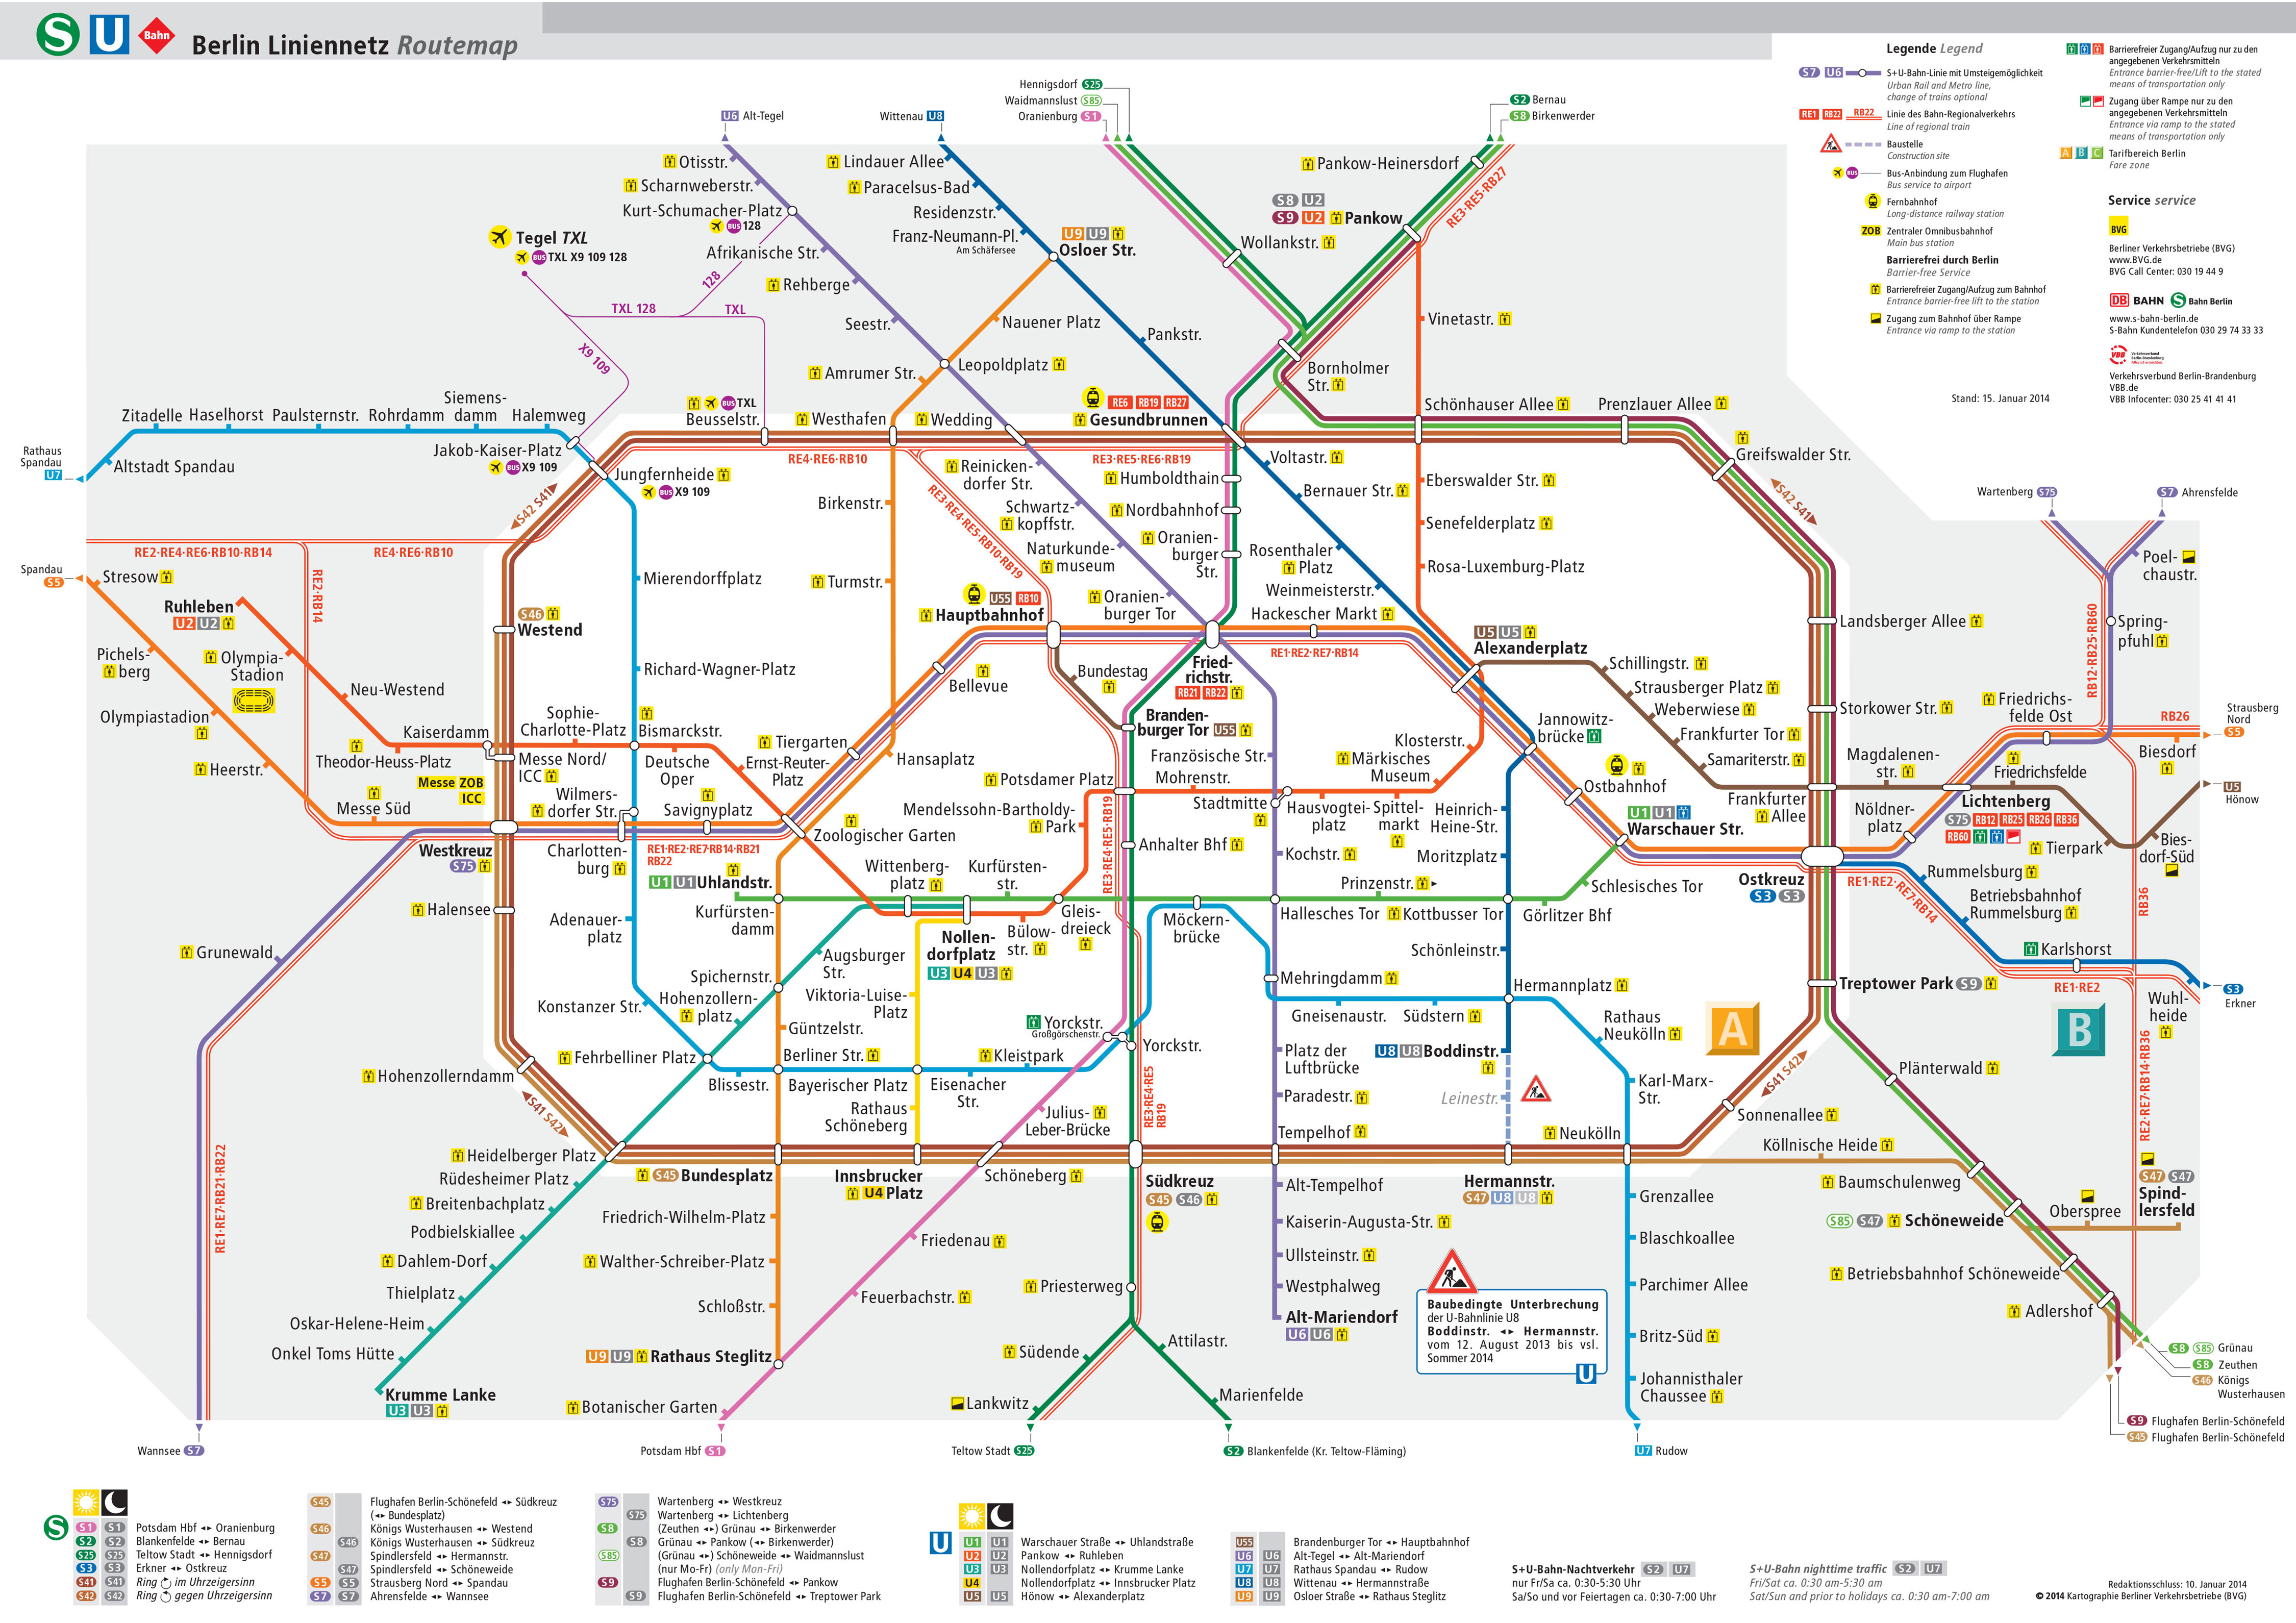 Map of Berlin u bahn, subway, tube & underground BVG network